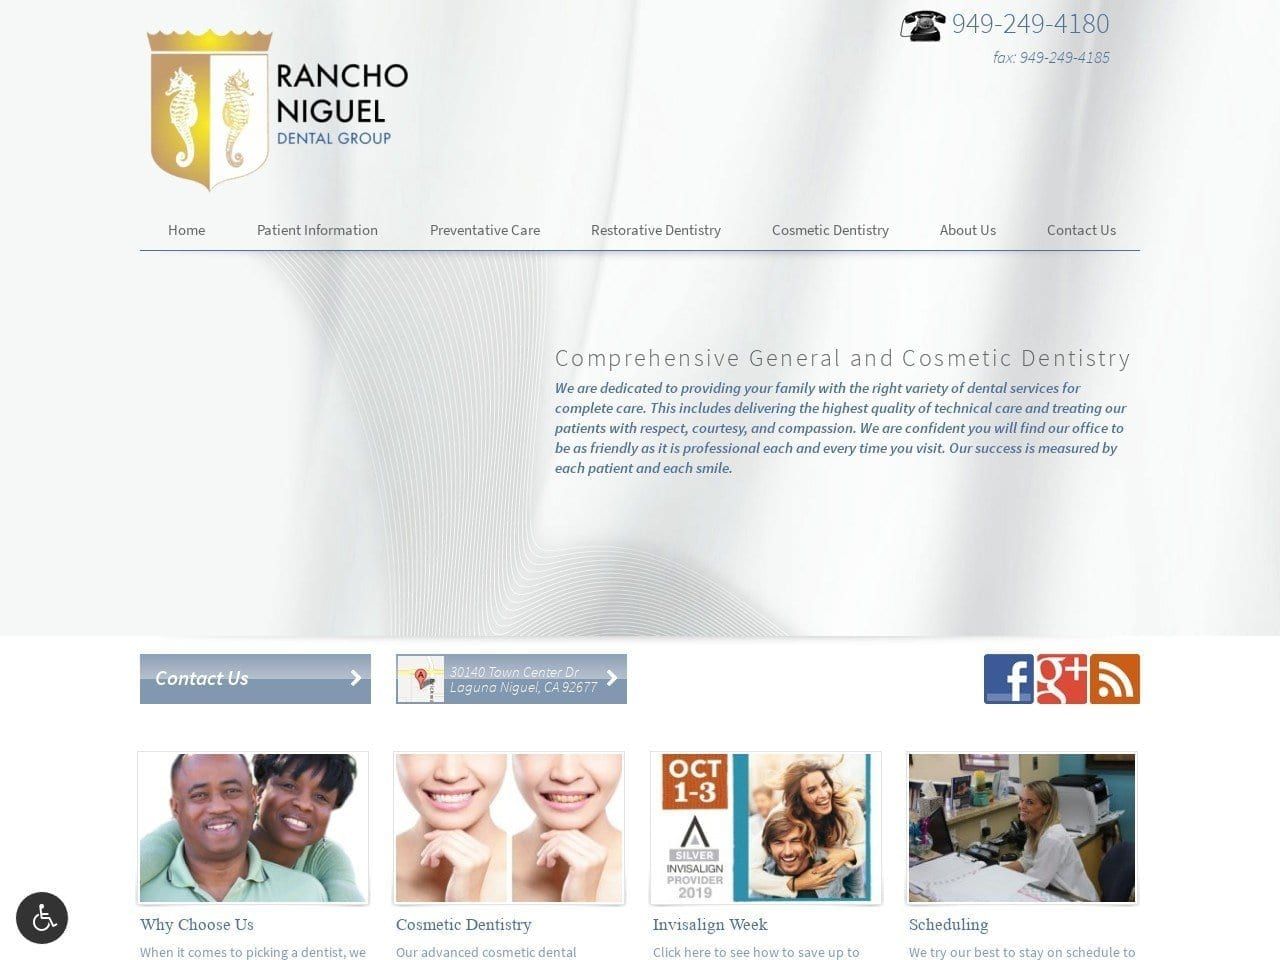 Rancho Niguel Dental Group Website Screenshot from ranchonigueldental.com